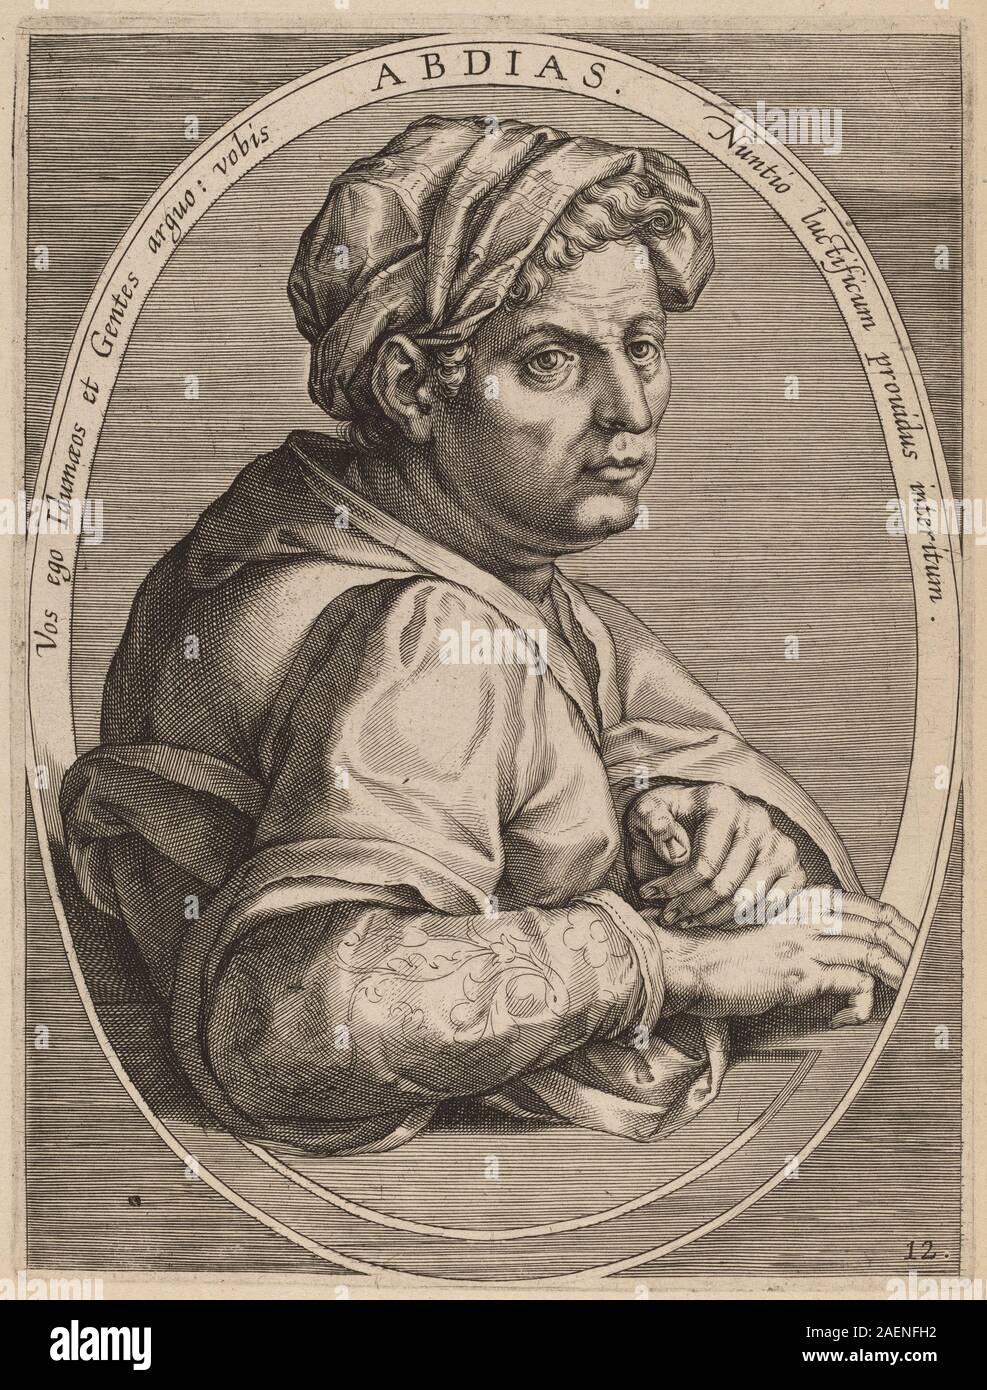 Theodor Galle after Jan van der Straet, Abdias, published 1613, Abdias; published 1613 Stock Photo